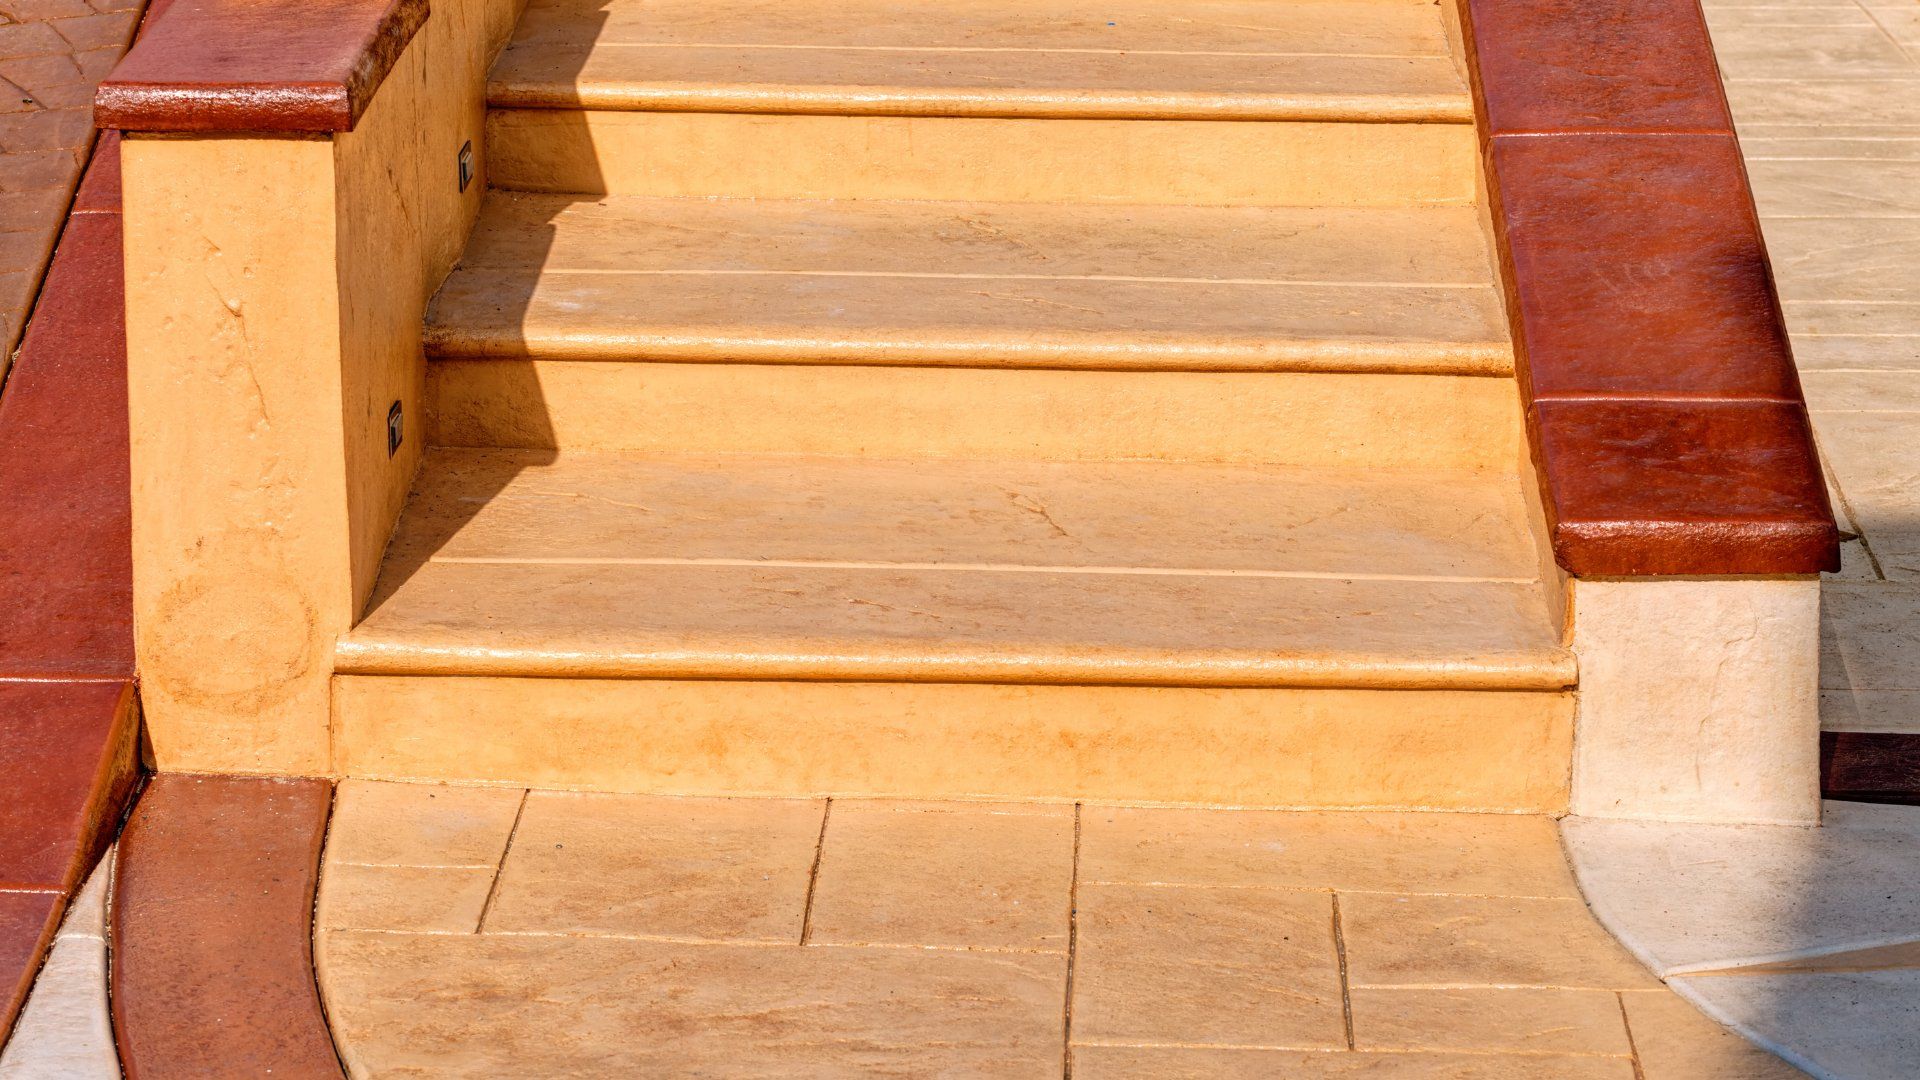 Coloured concrete steps with a brown concrete border.